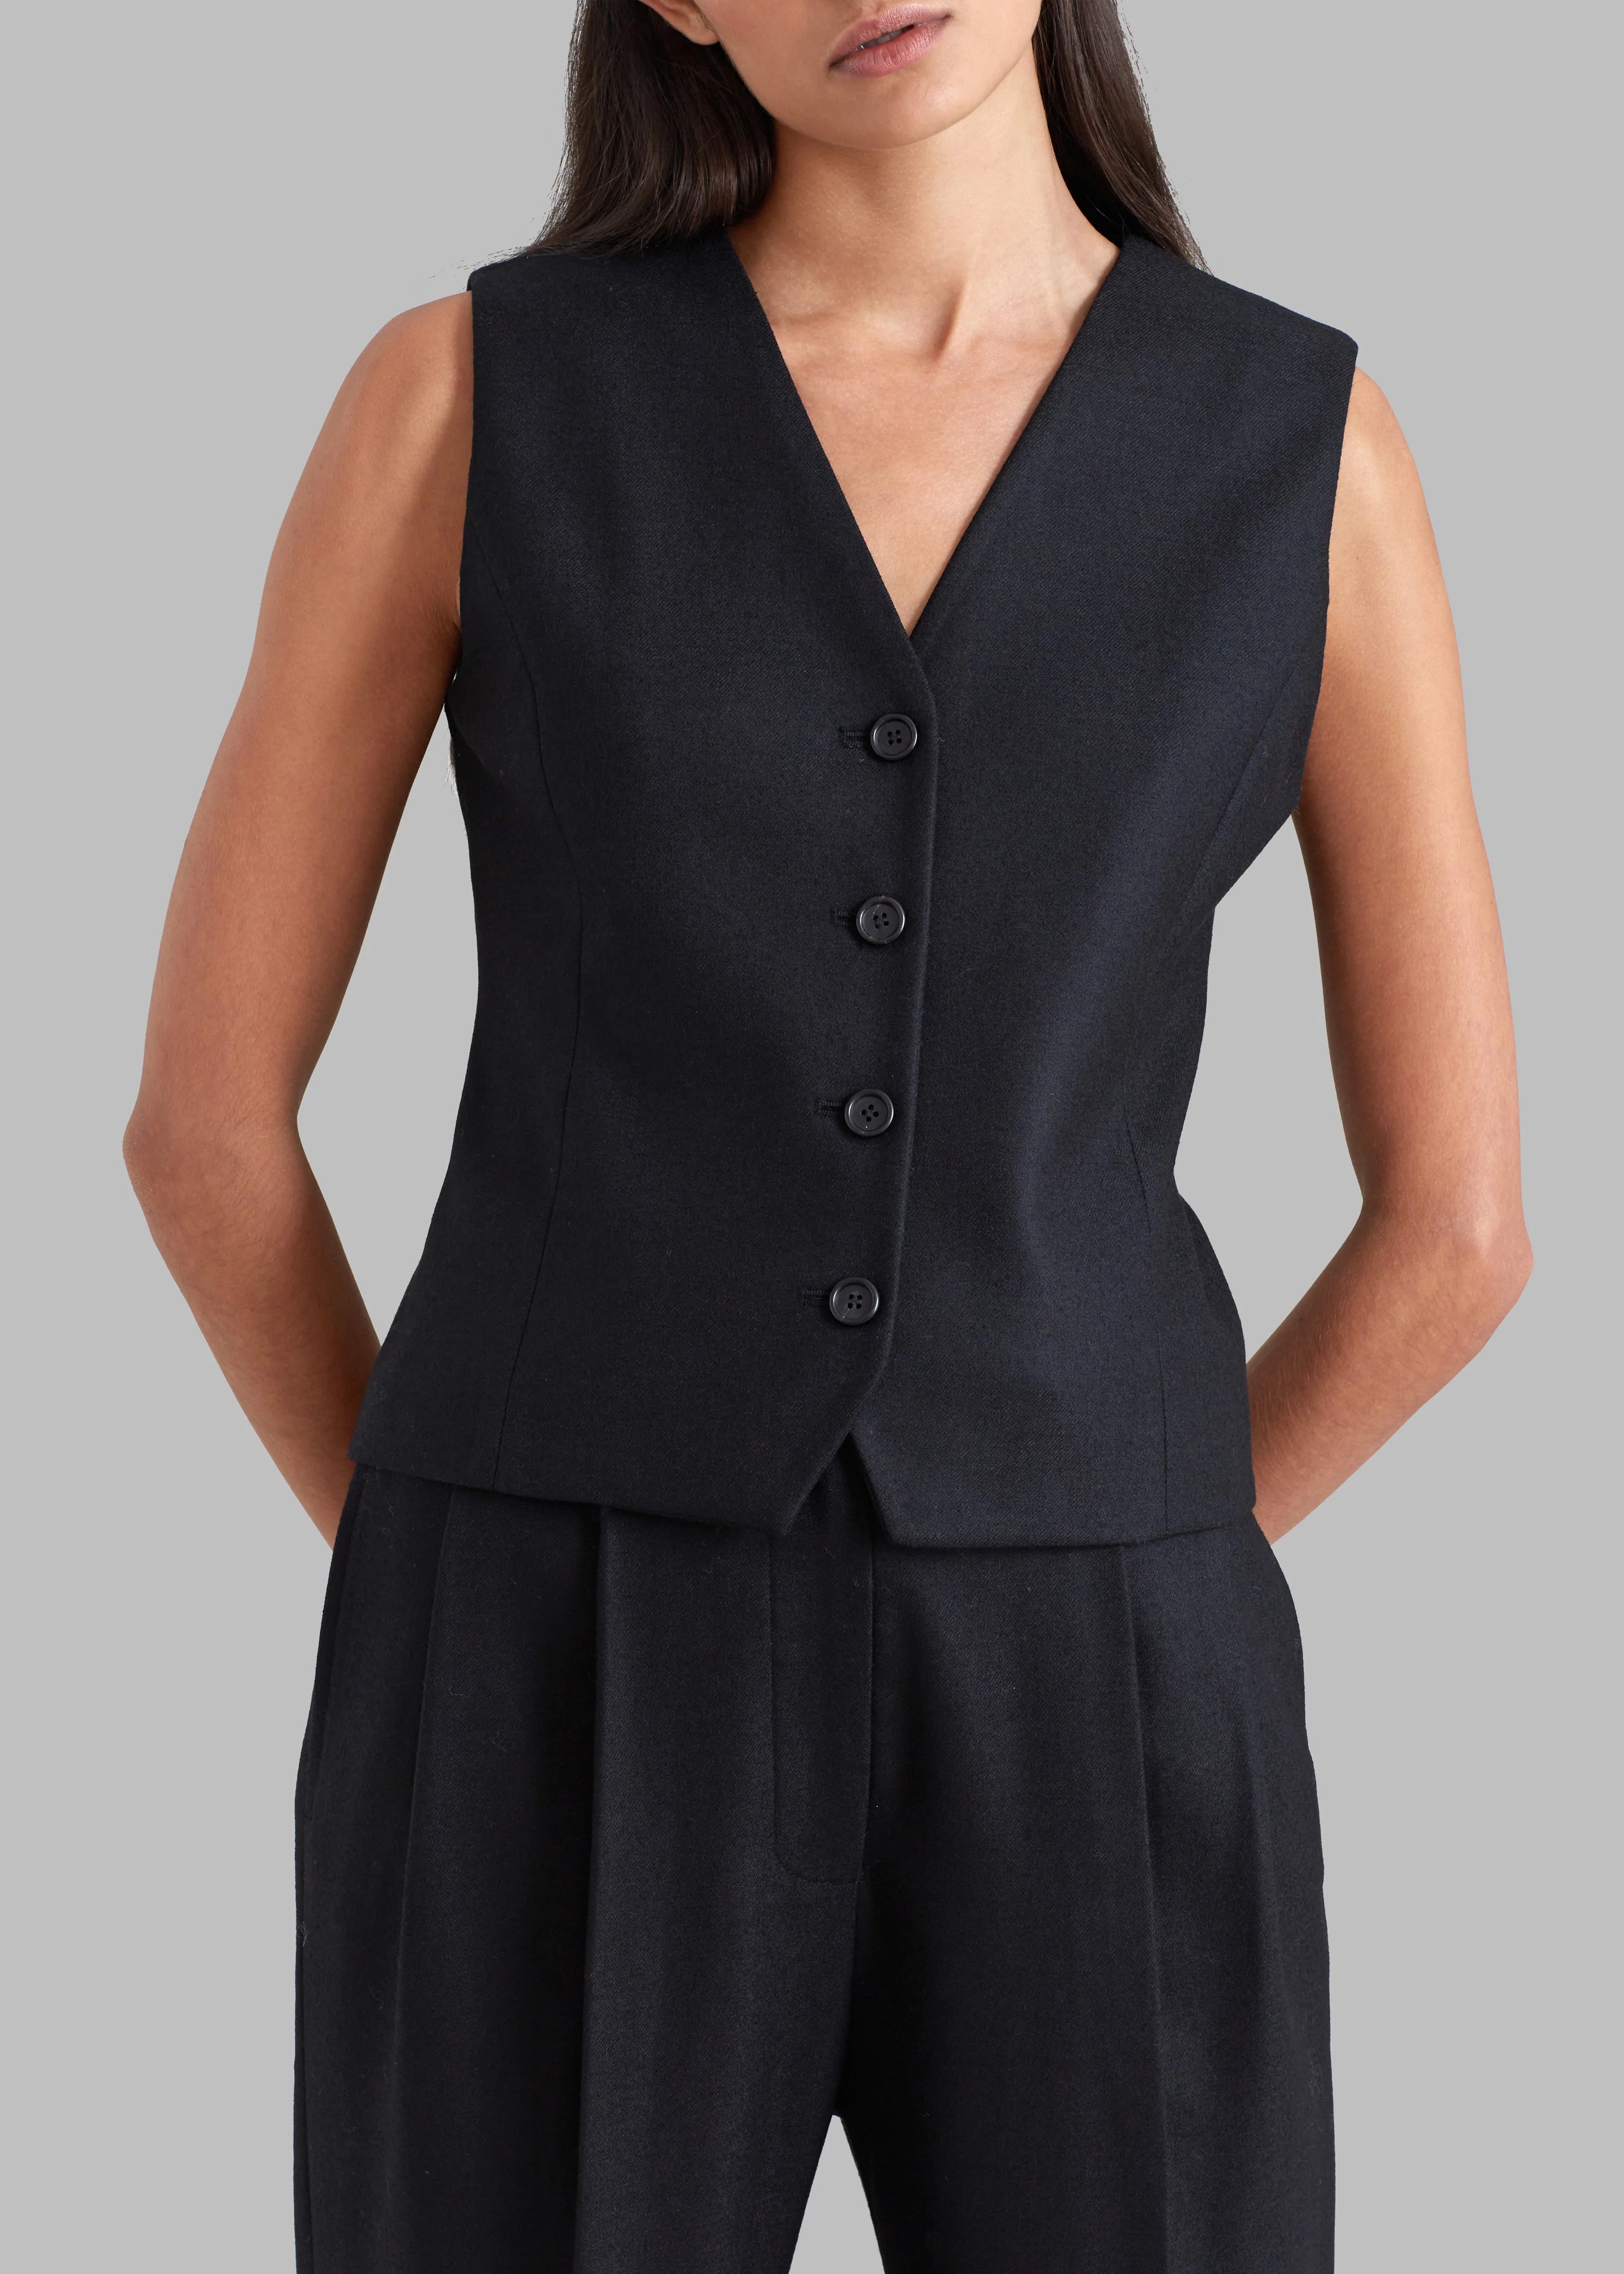 Eleanor Wool Vest - Black - 4